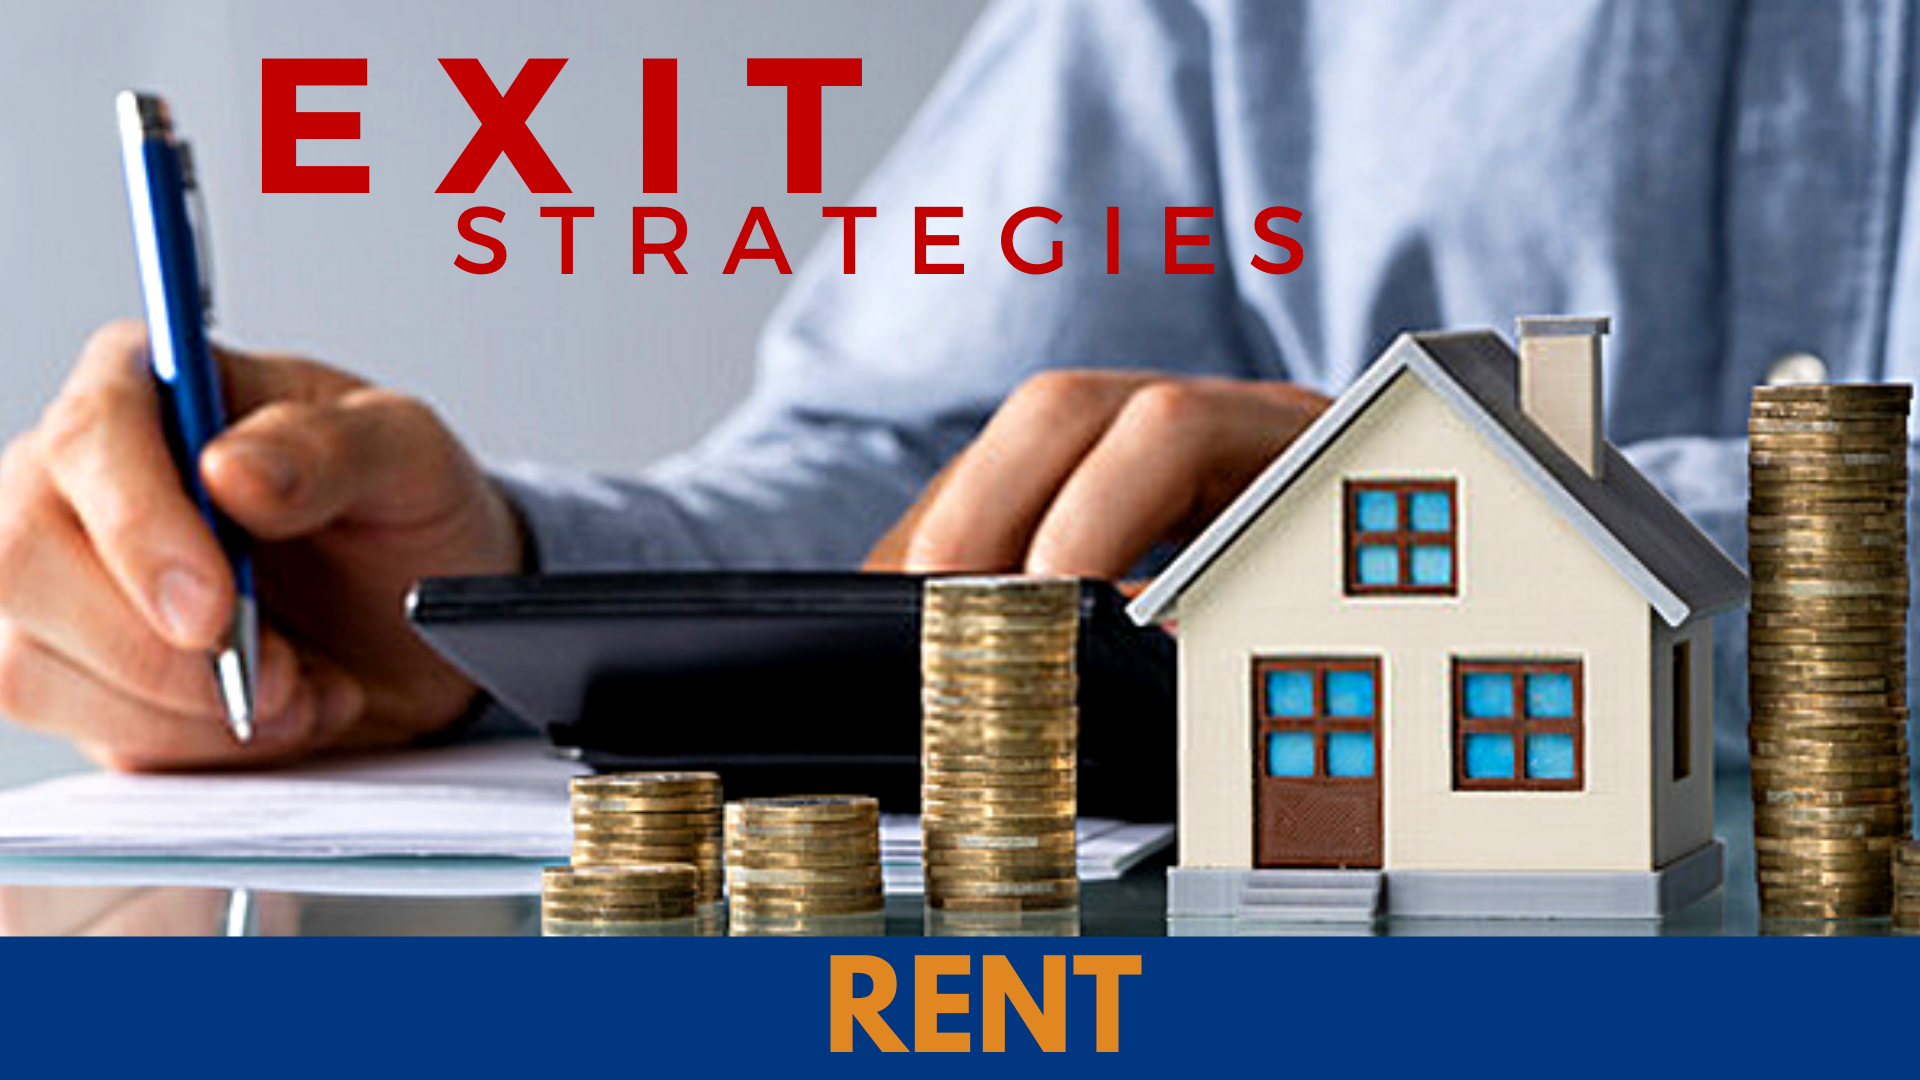 exit strategies - rent banner